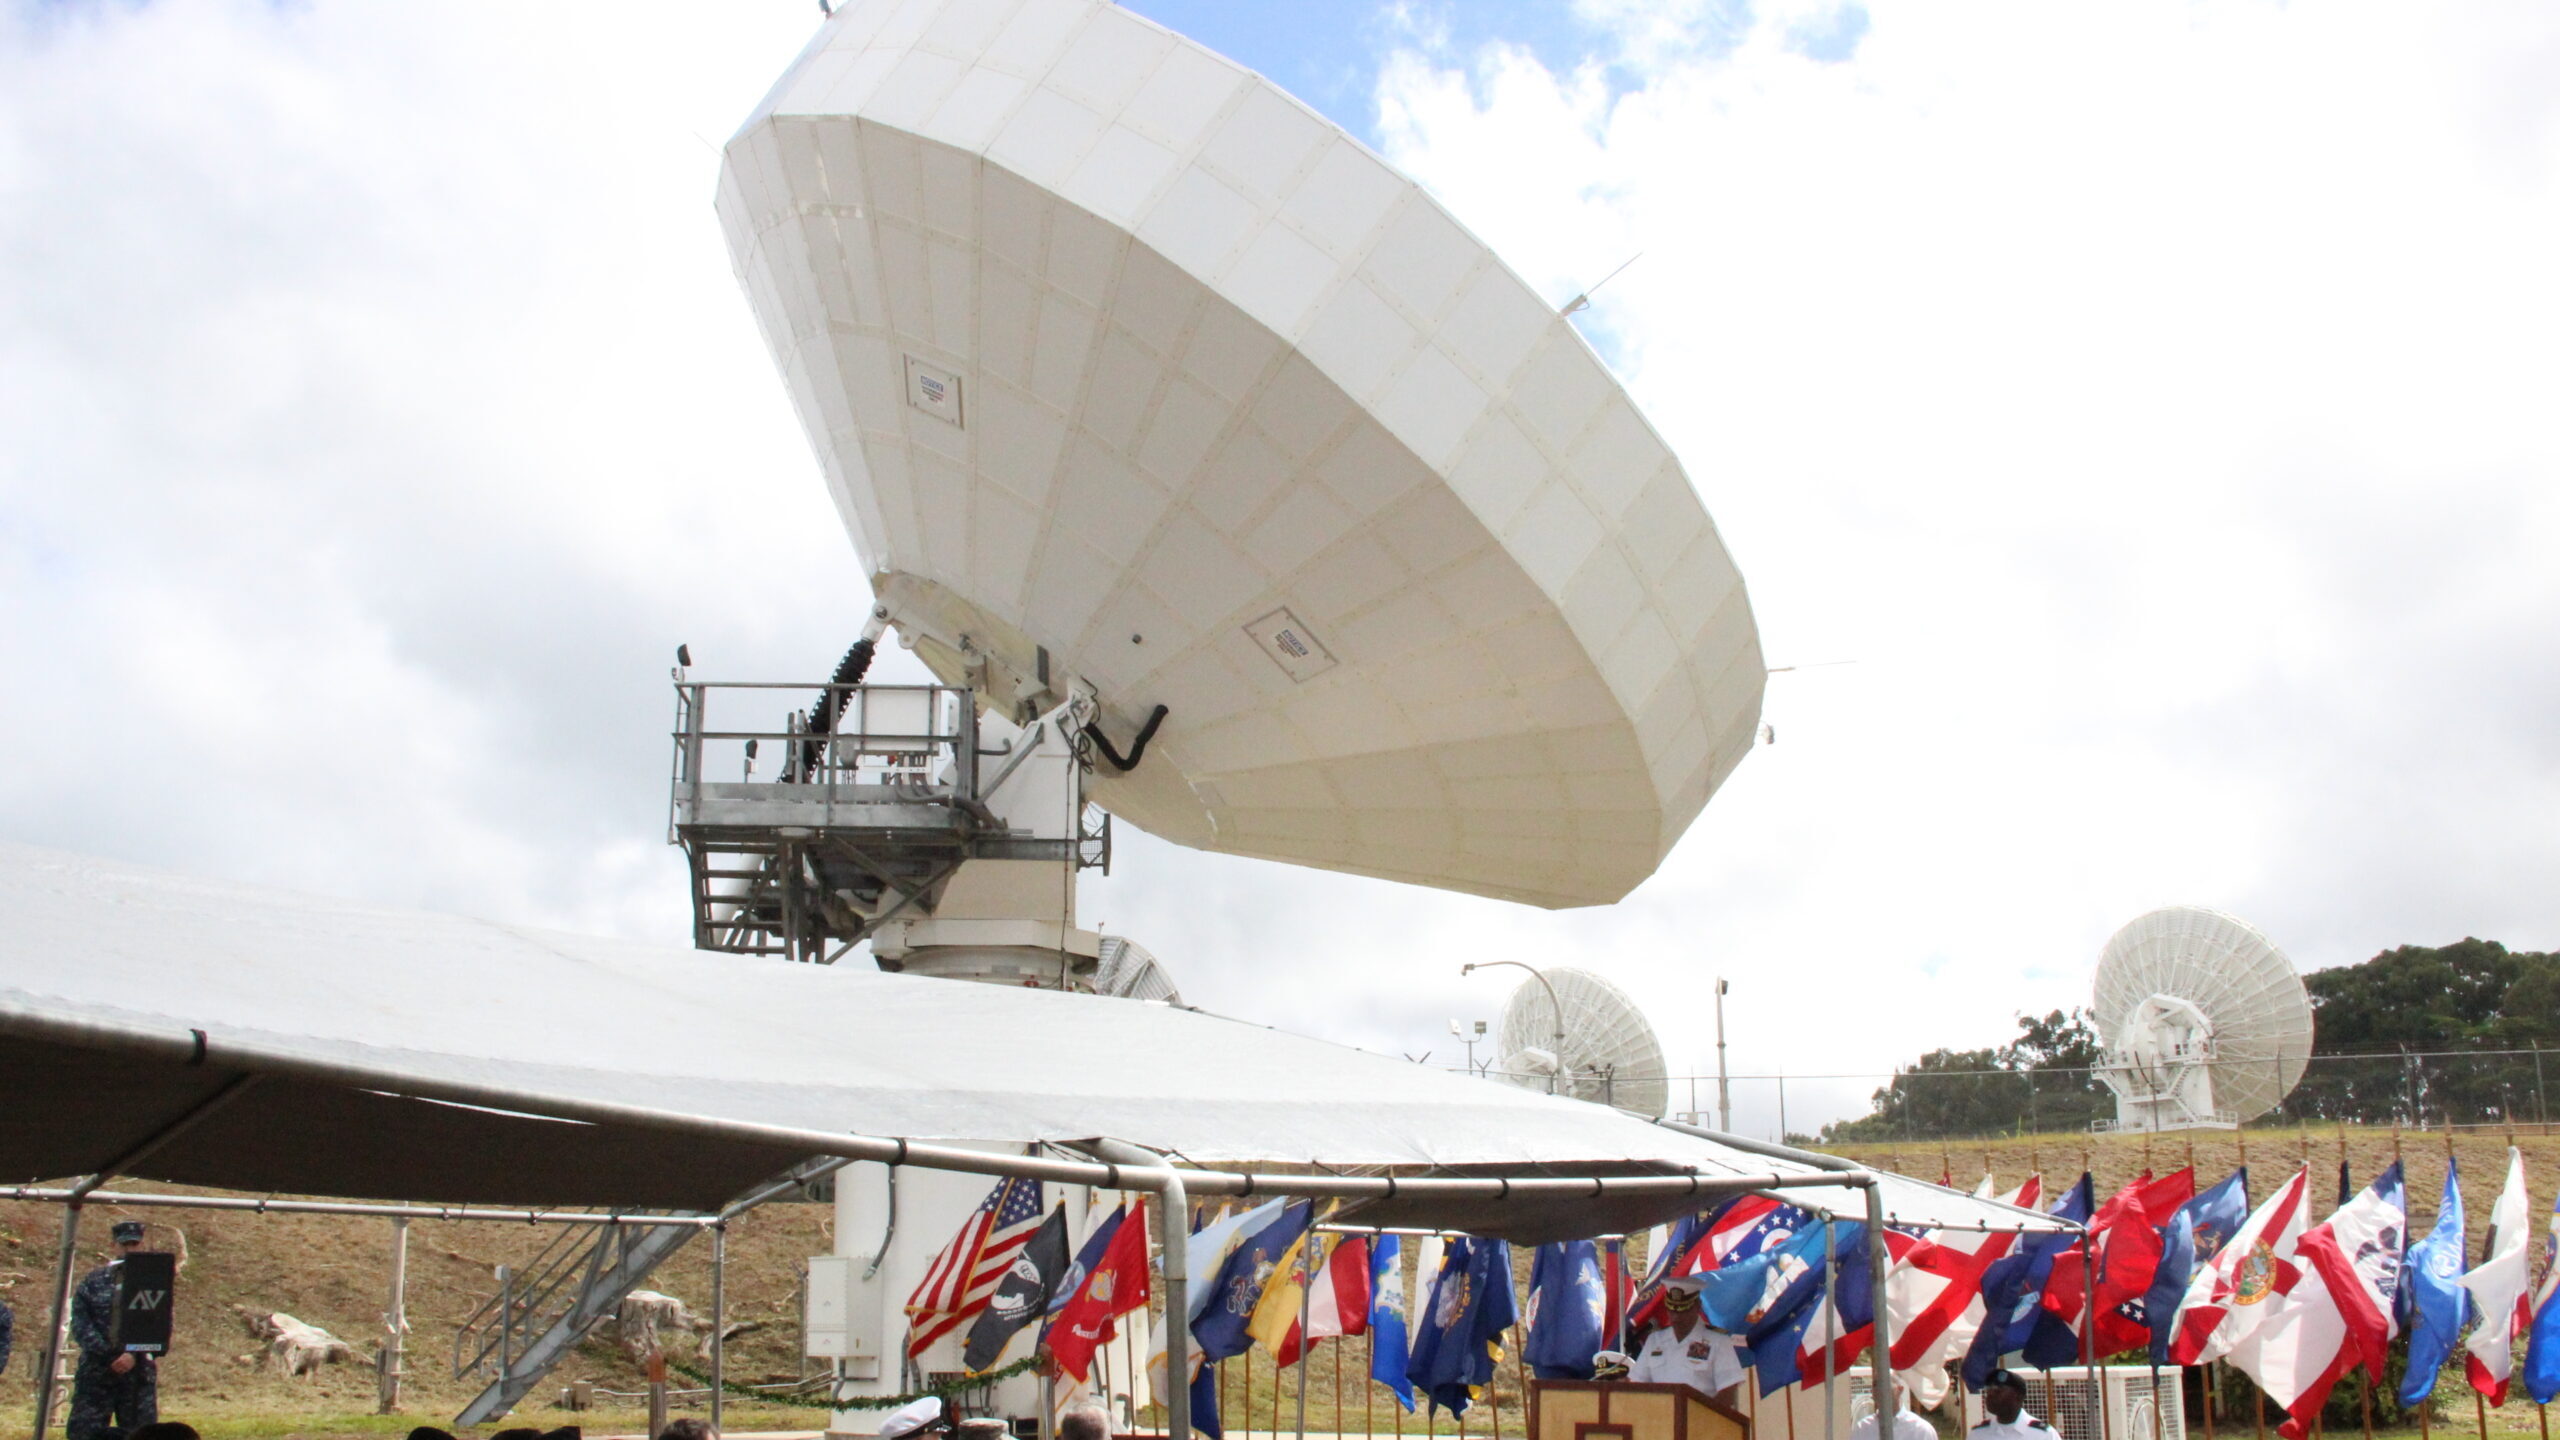 Wahiawa Satellite Communications Facility commissions the first modernized enterprise terminal